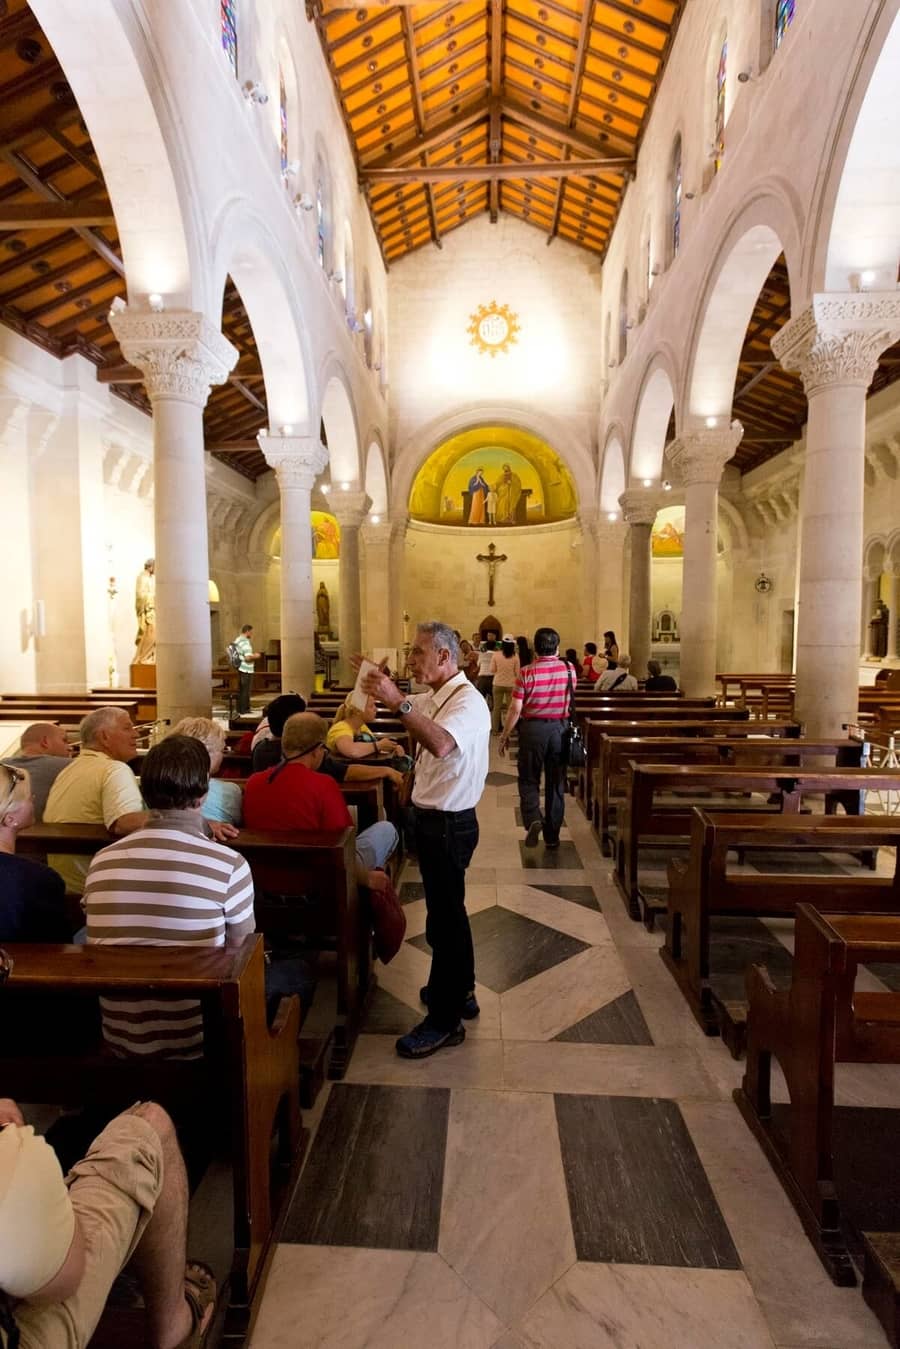 At the st. Joseph Church in Nazareth